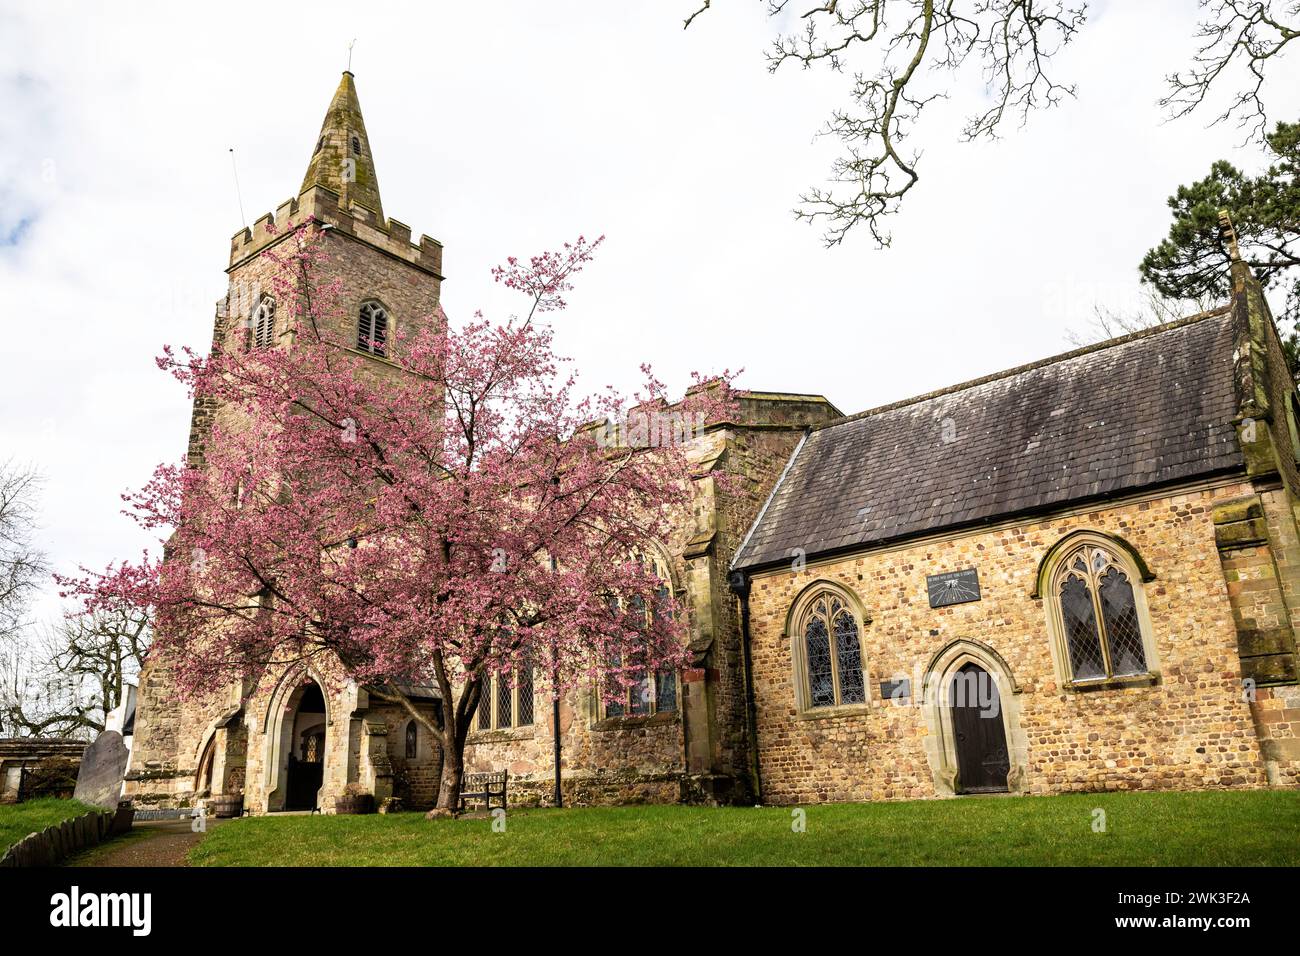 St Mary's Church Lutterworth dans le Leicestershire, Royaume-Uni Banque D'Images